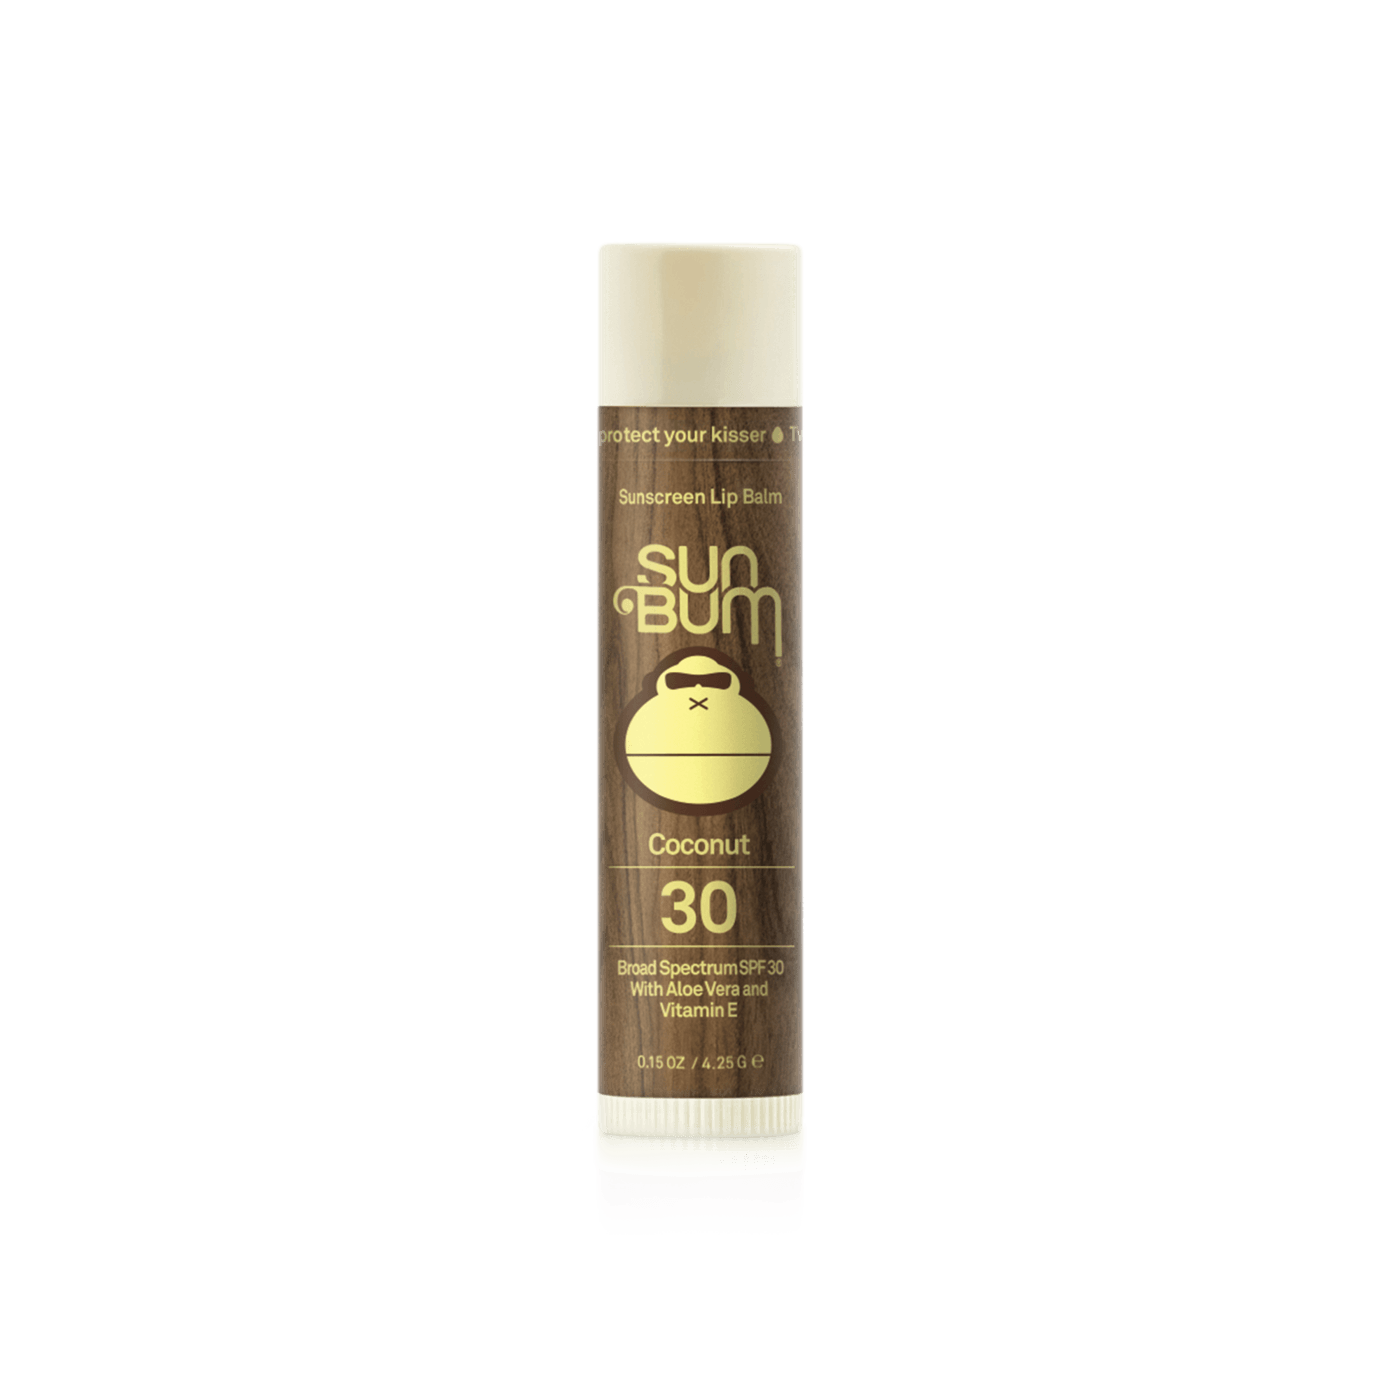 SUN BUM Original SPF 30 Sunscreen Lip Balm Coconut ACCESSORIES - Sunscreen Sun Bum 